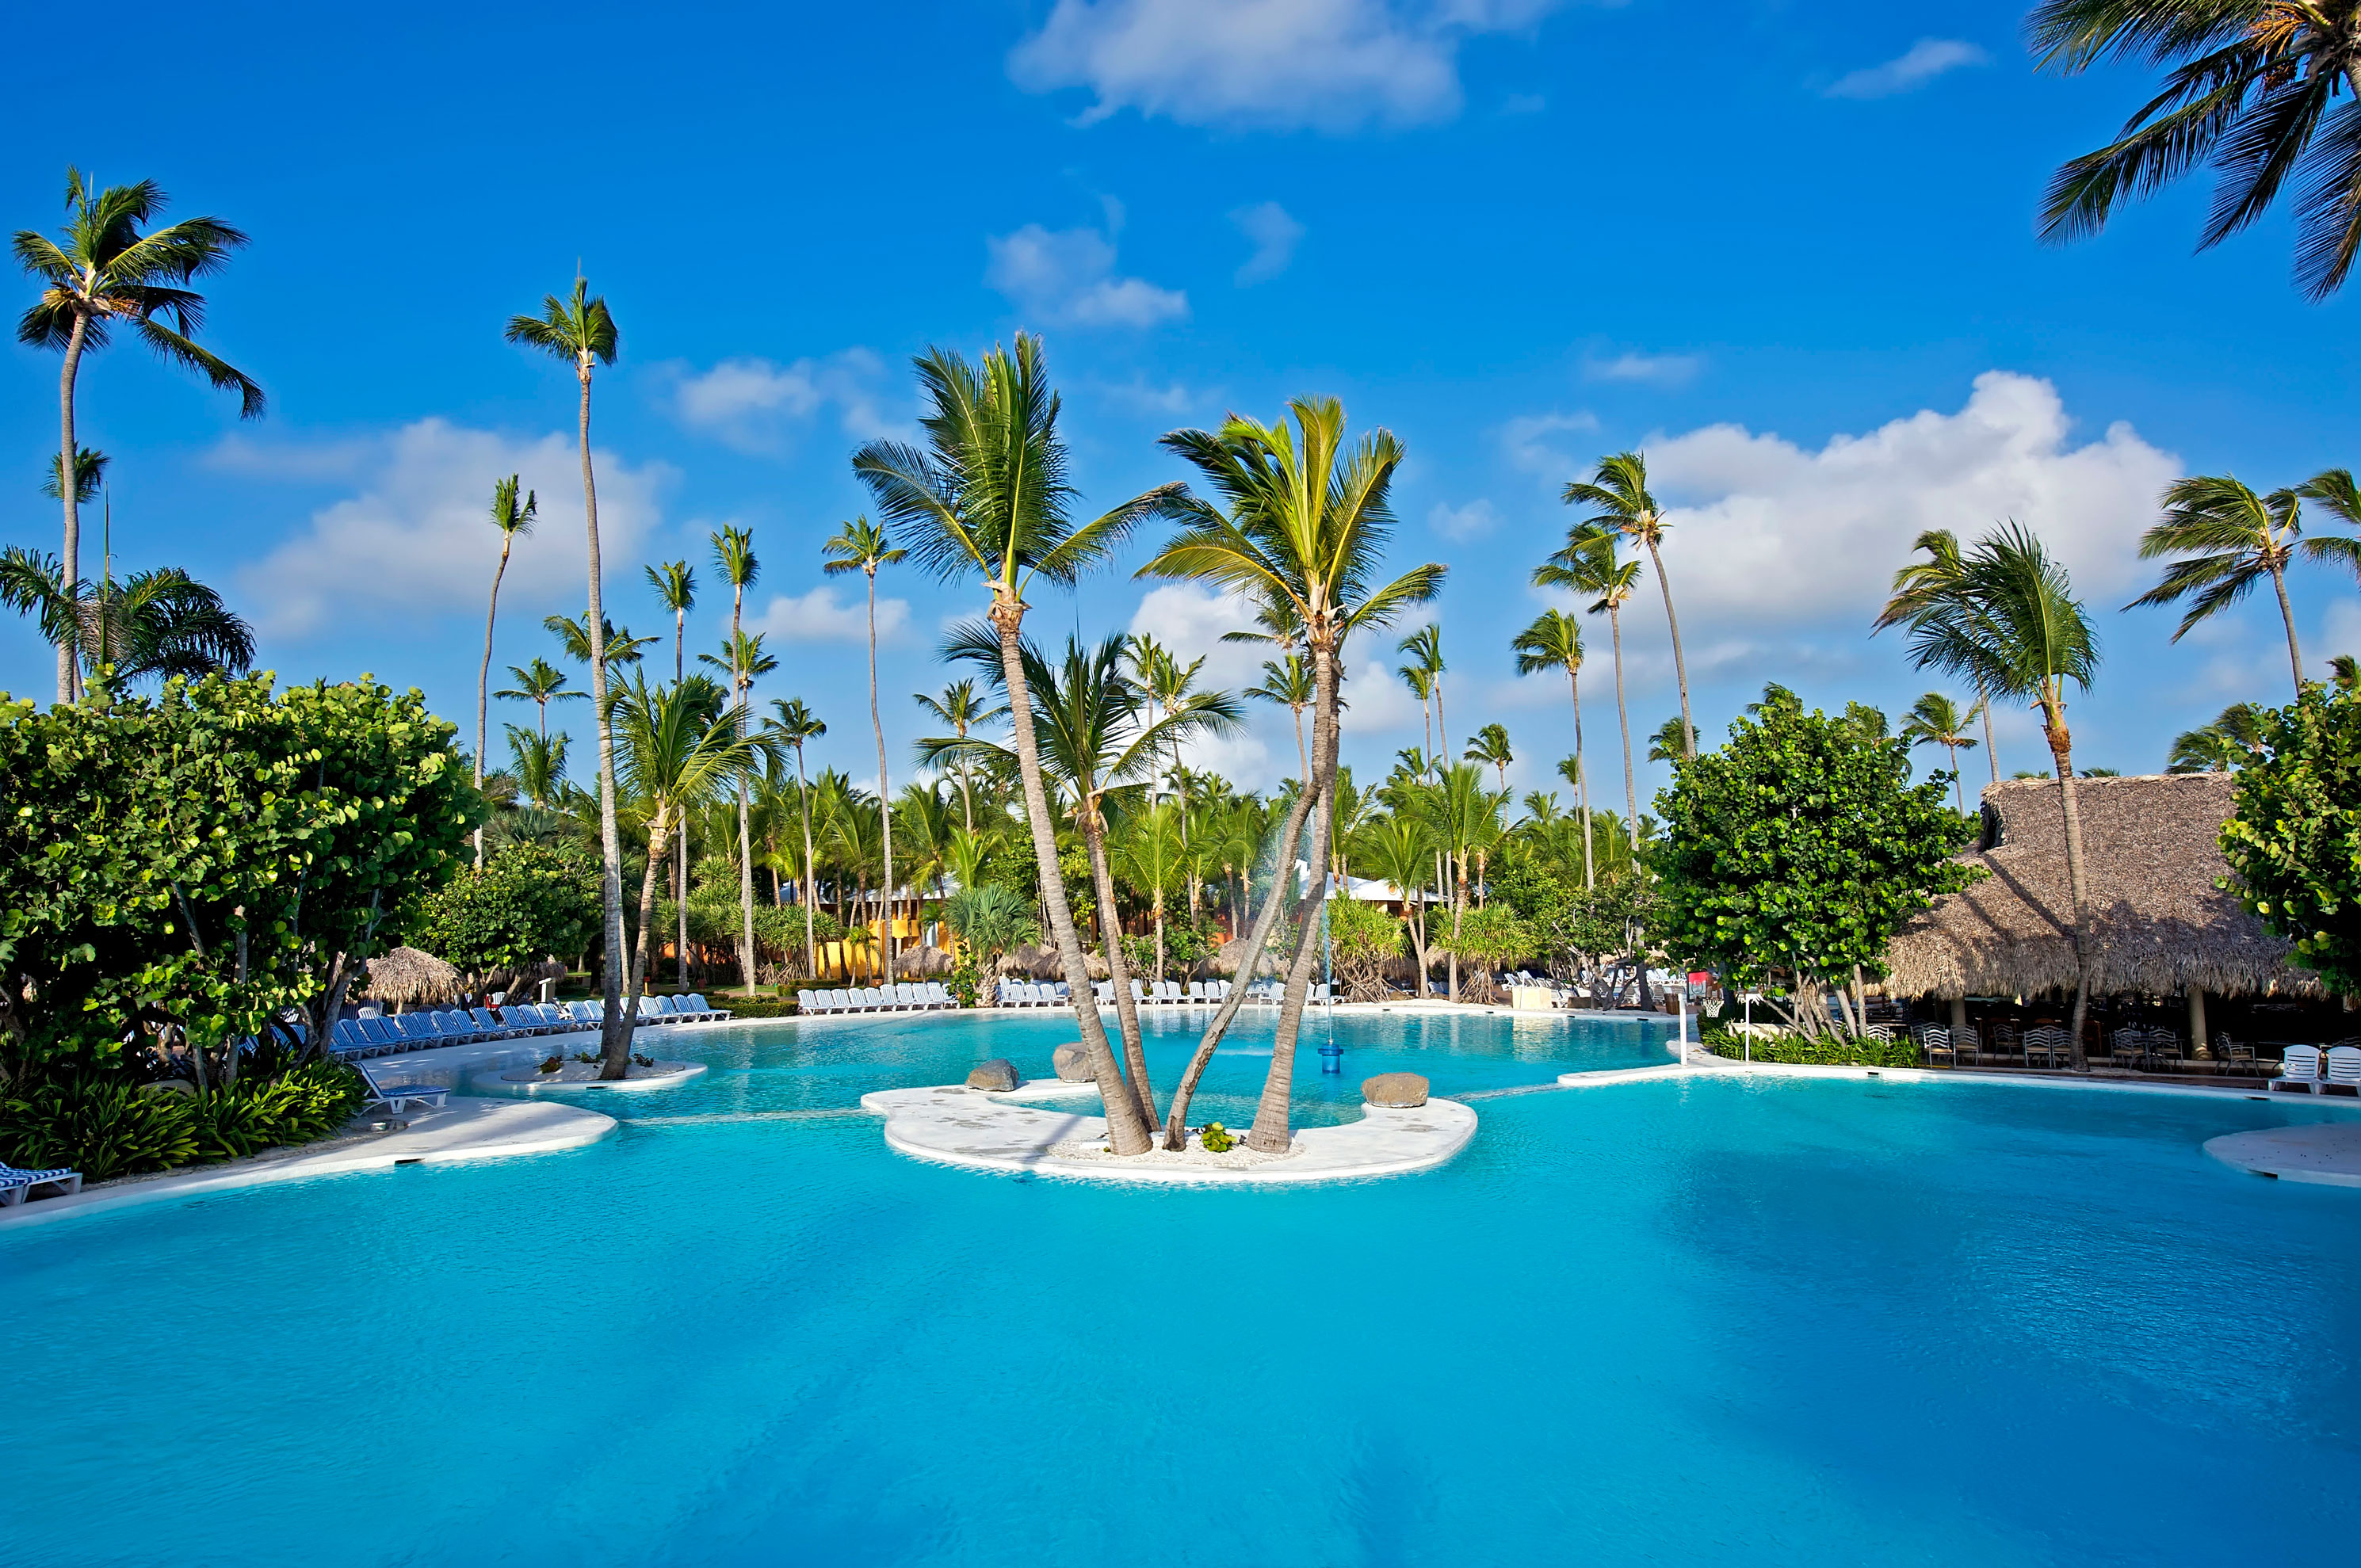 Iberostar Punta Cana Dominican Republic all-inclusive resort pool